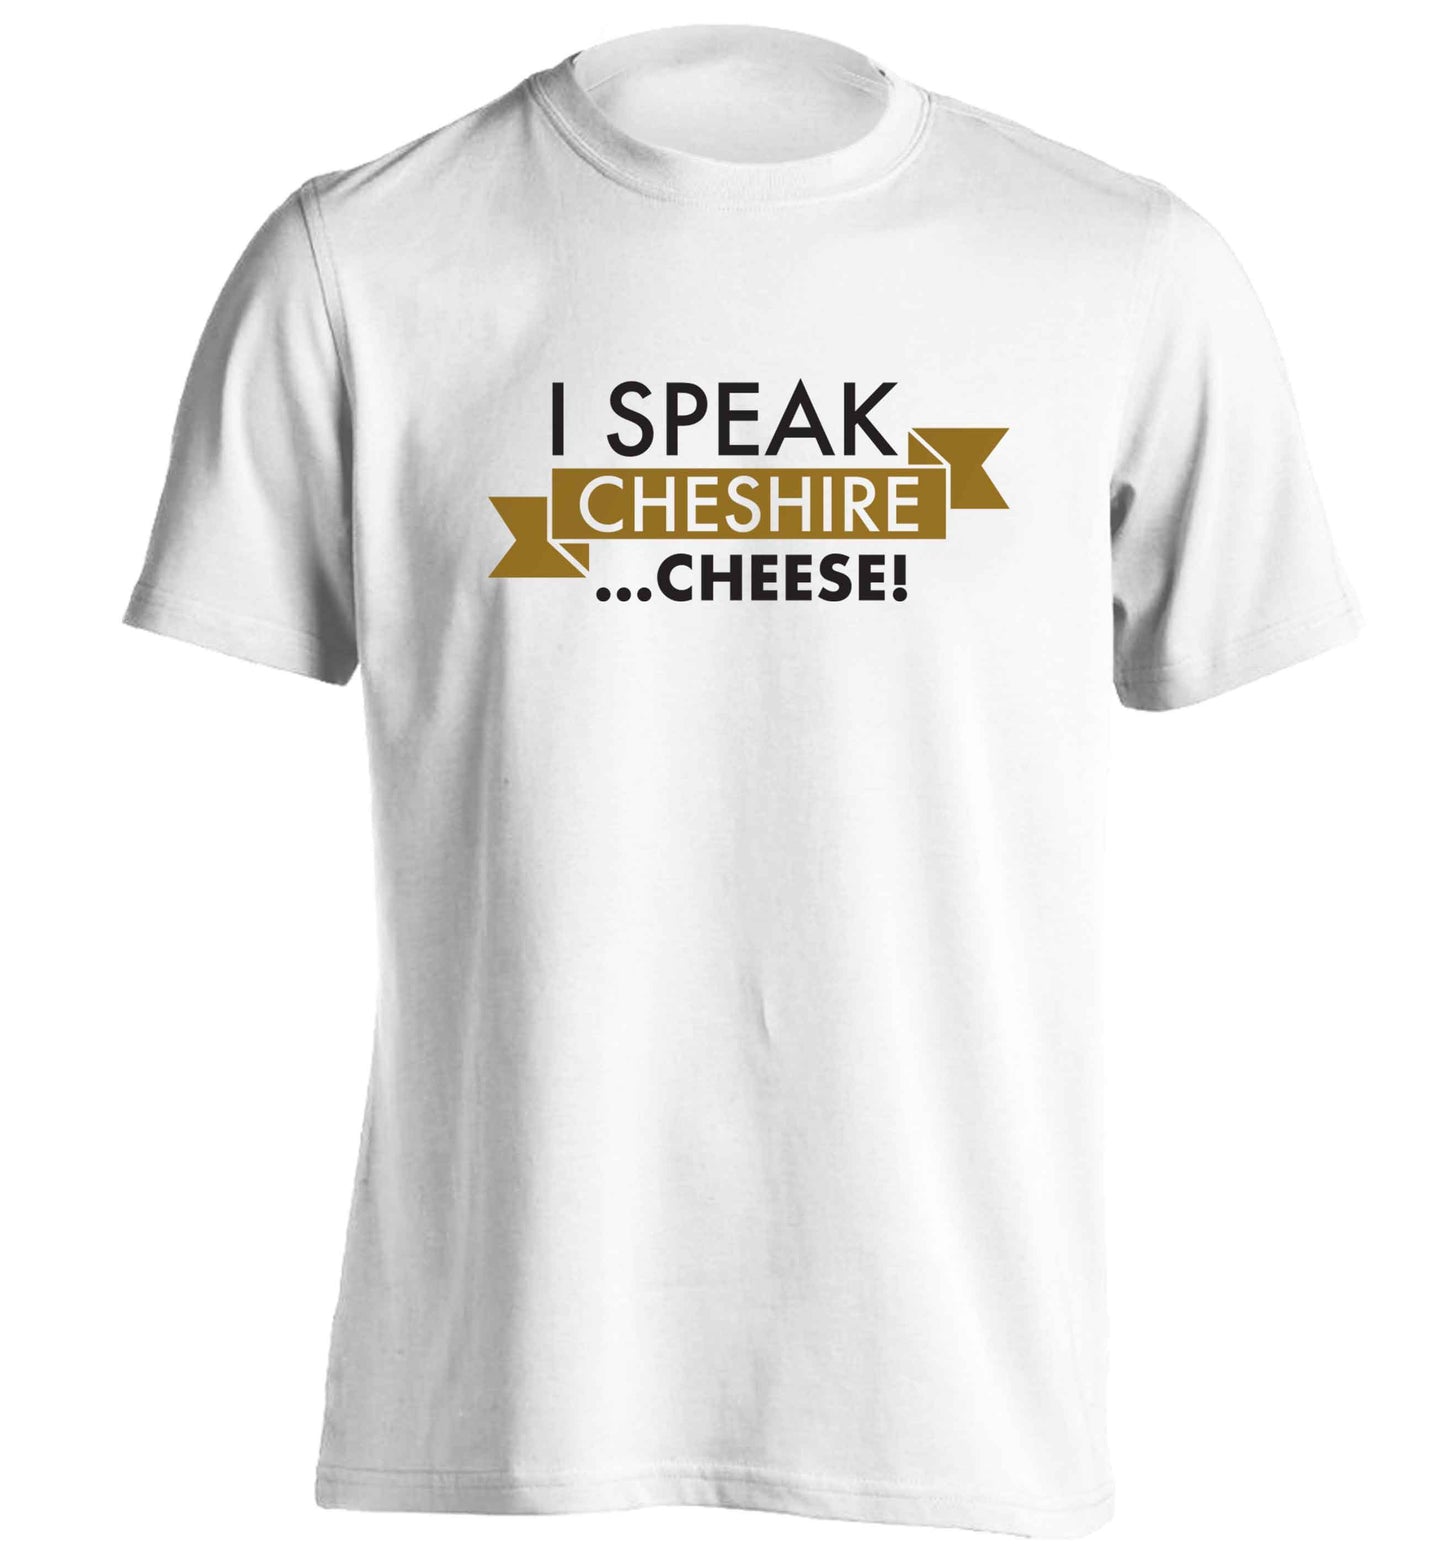 I speak Cheshire cheese adults unisex white Tshirt 2XL